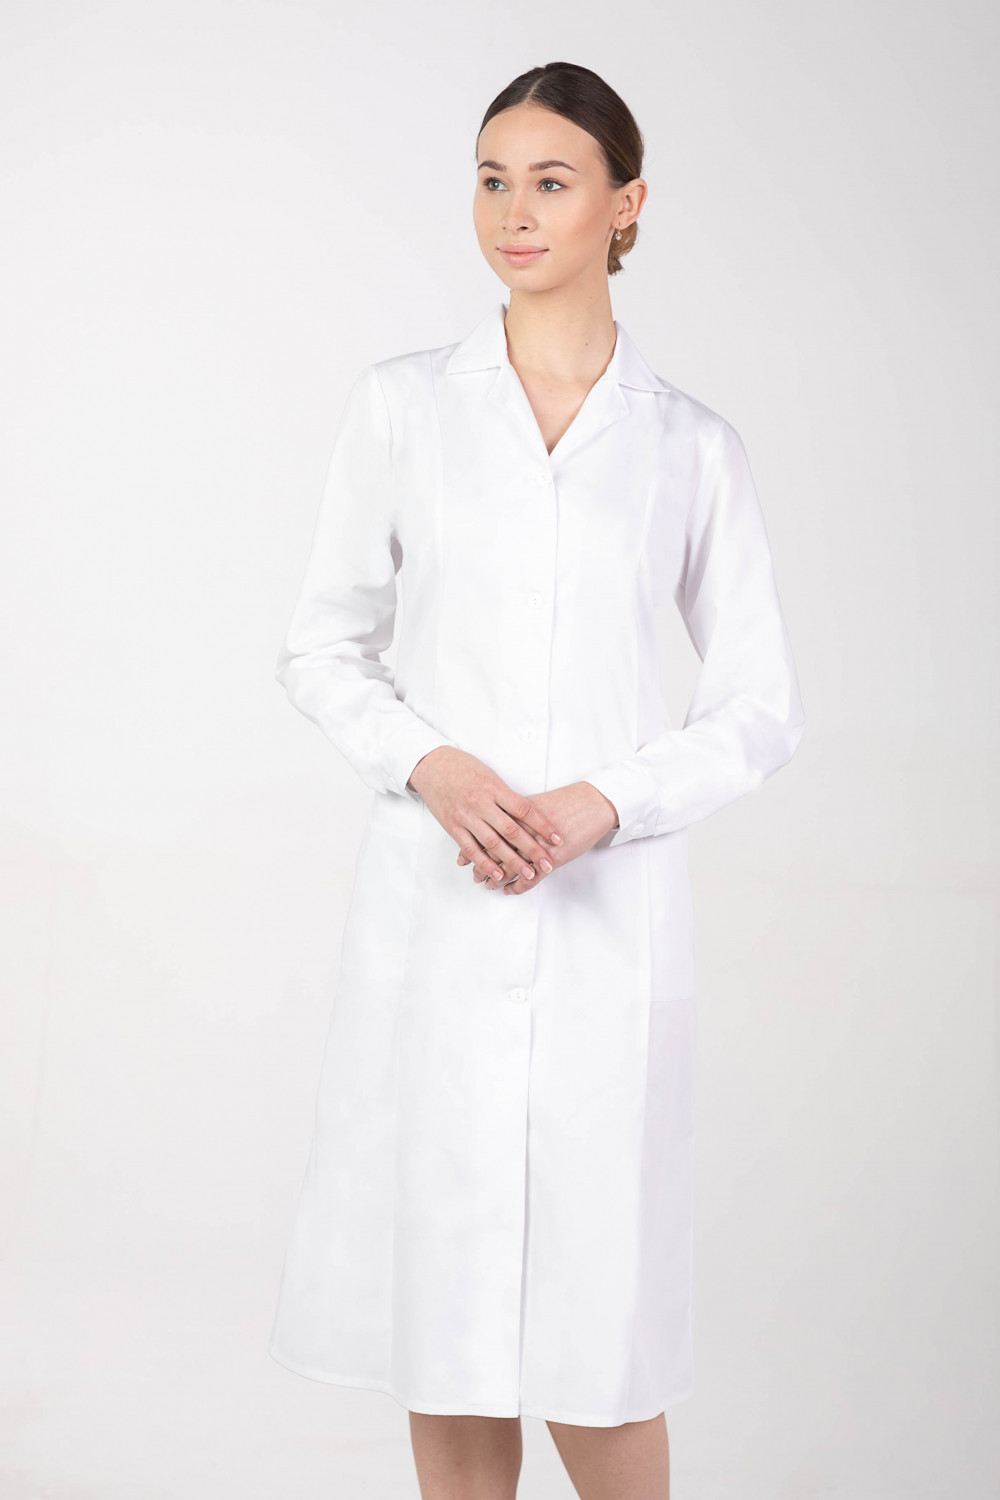 Dámsky zdravotnícky plášť M-092B, biela 